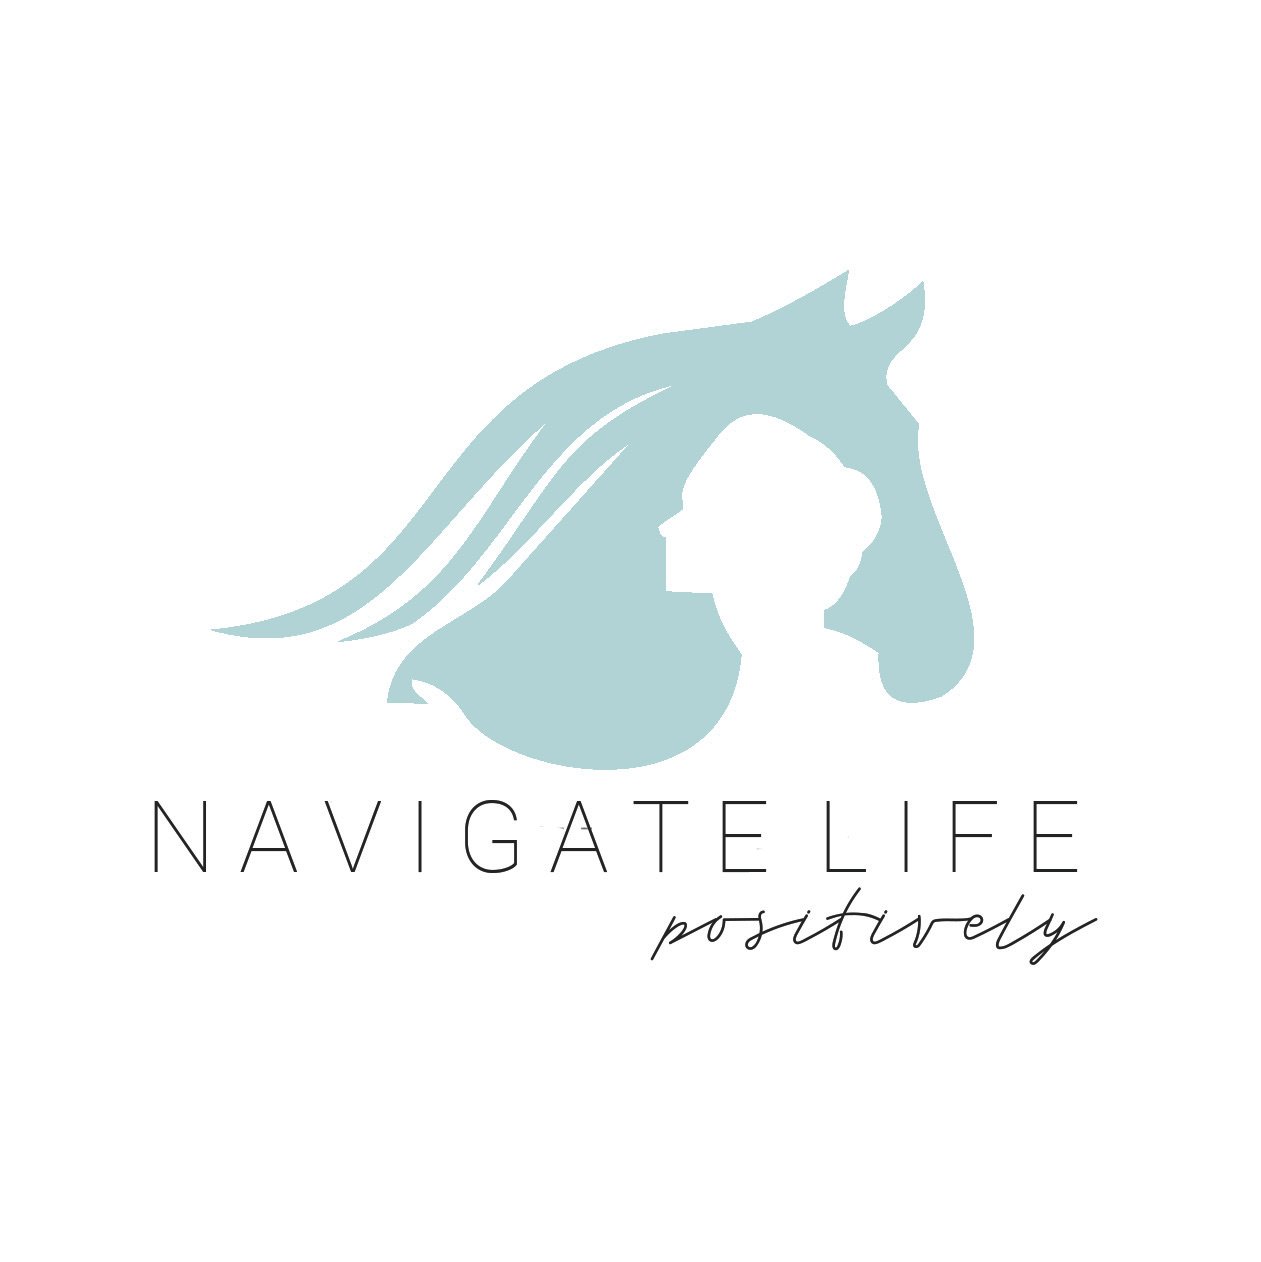 Navigate Life Positively